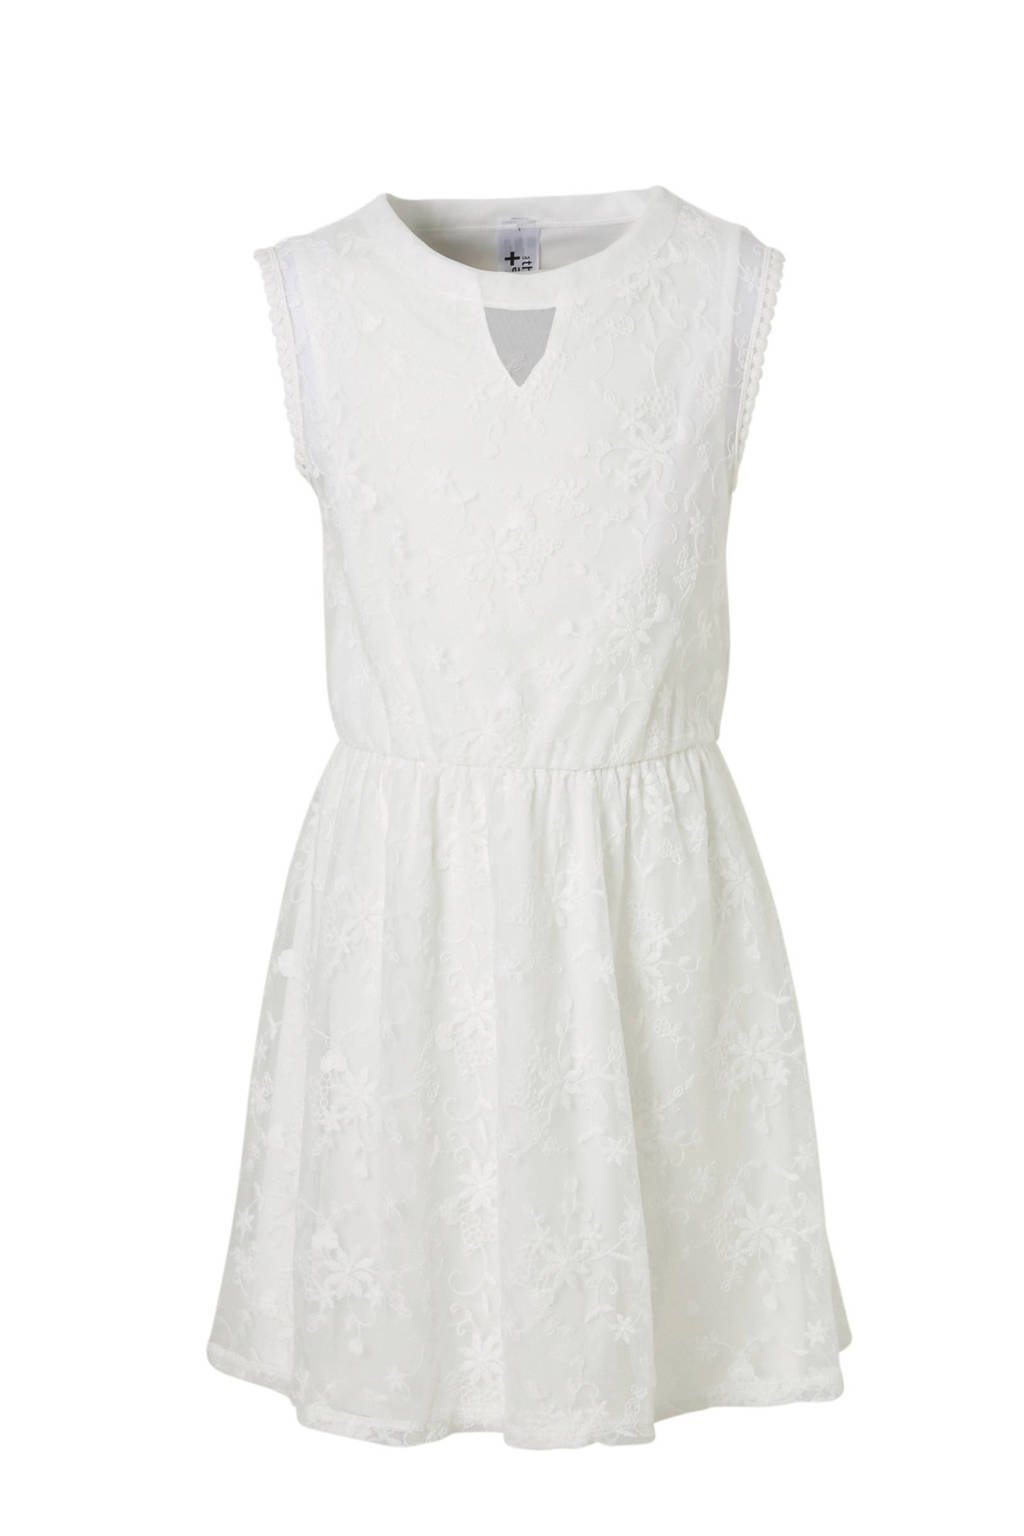 Nieuw C&A Here & There kanten jurk wit | wehkamp WA-73